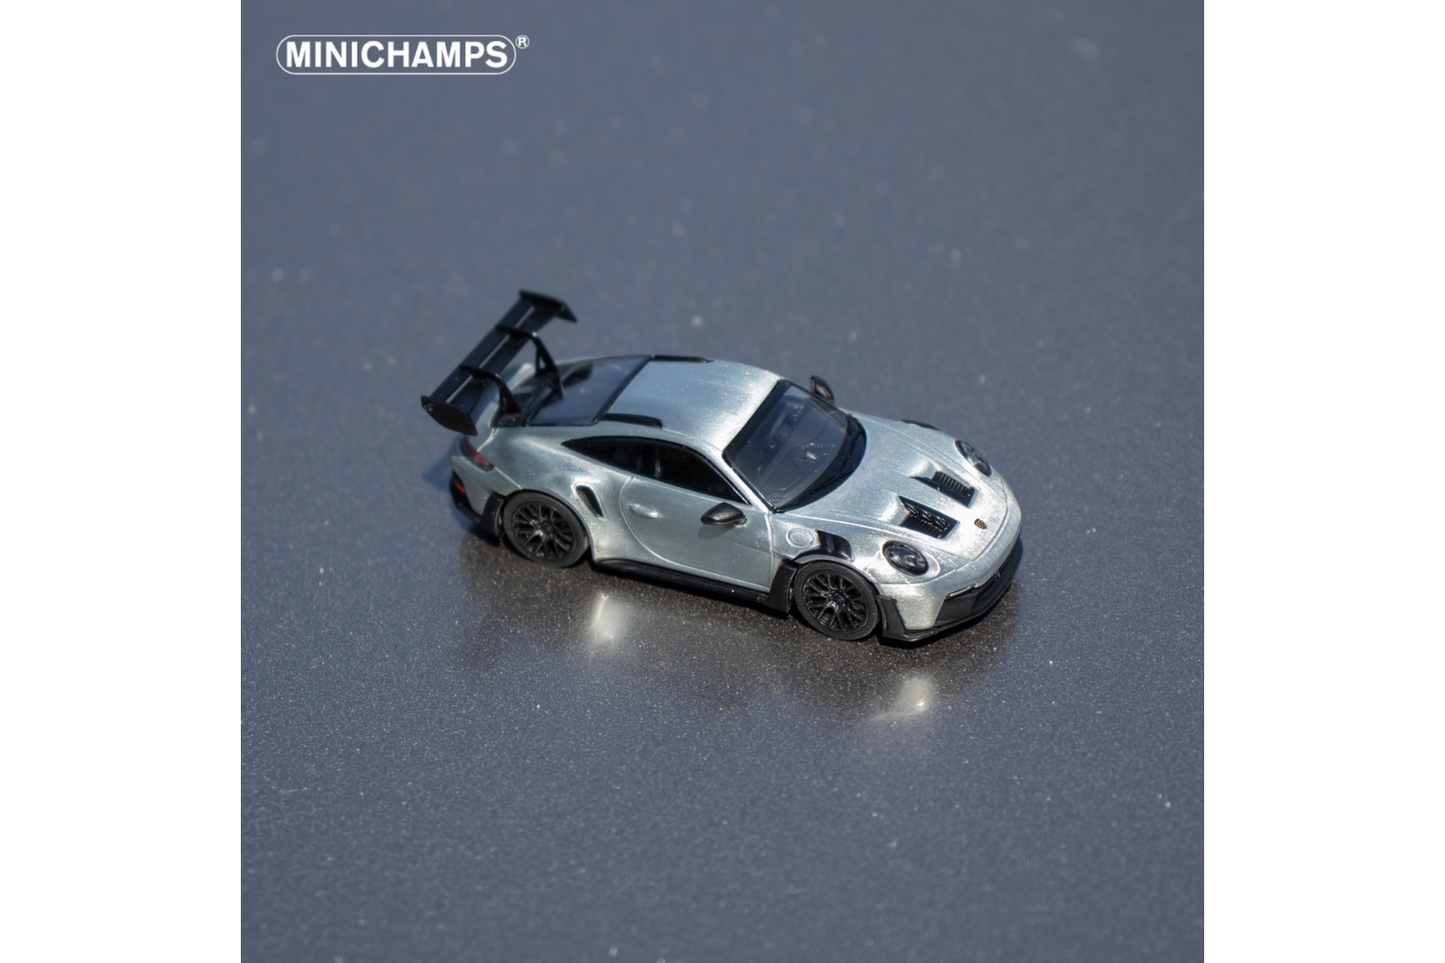 Minichamps64 x CLDC Exclusive Porsche 911 GT3 RS in Gloss Raw Silver (English Magazine)